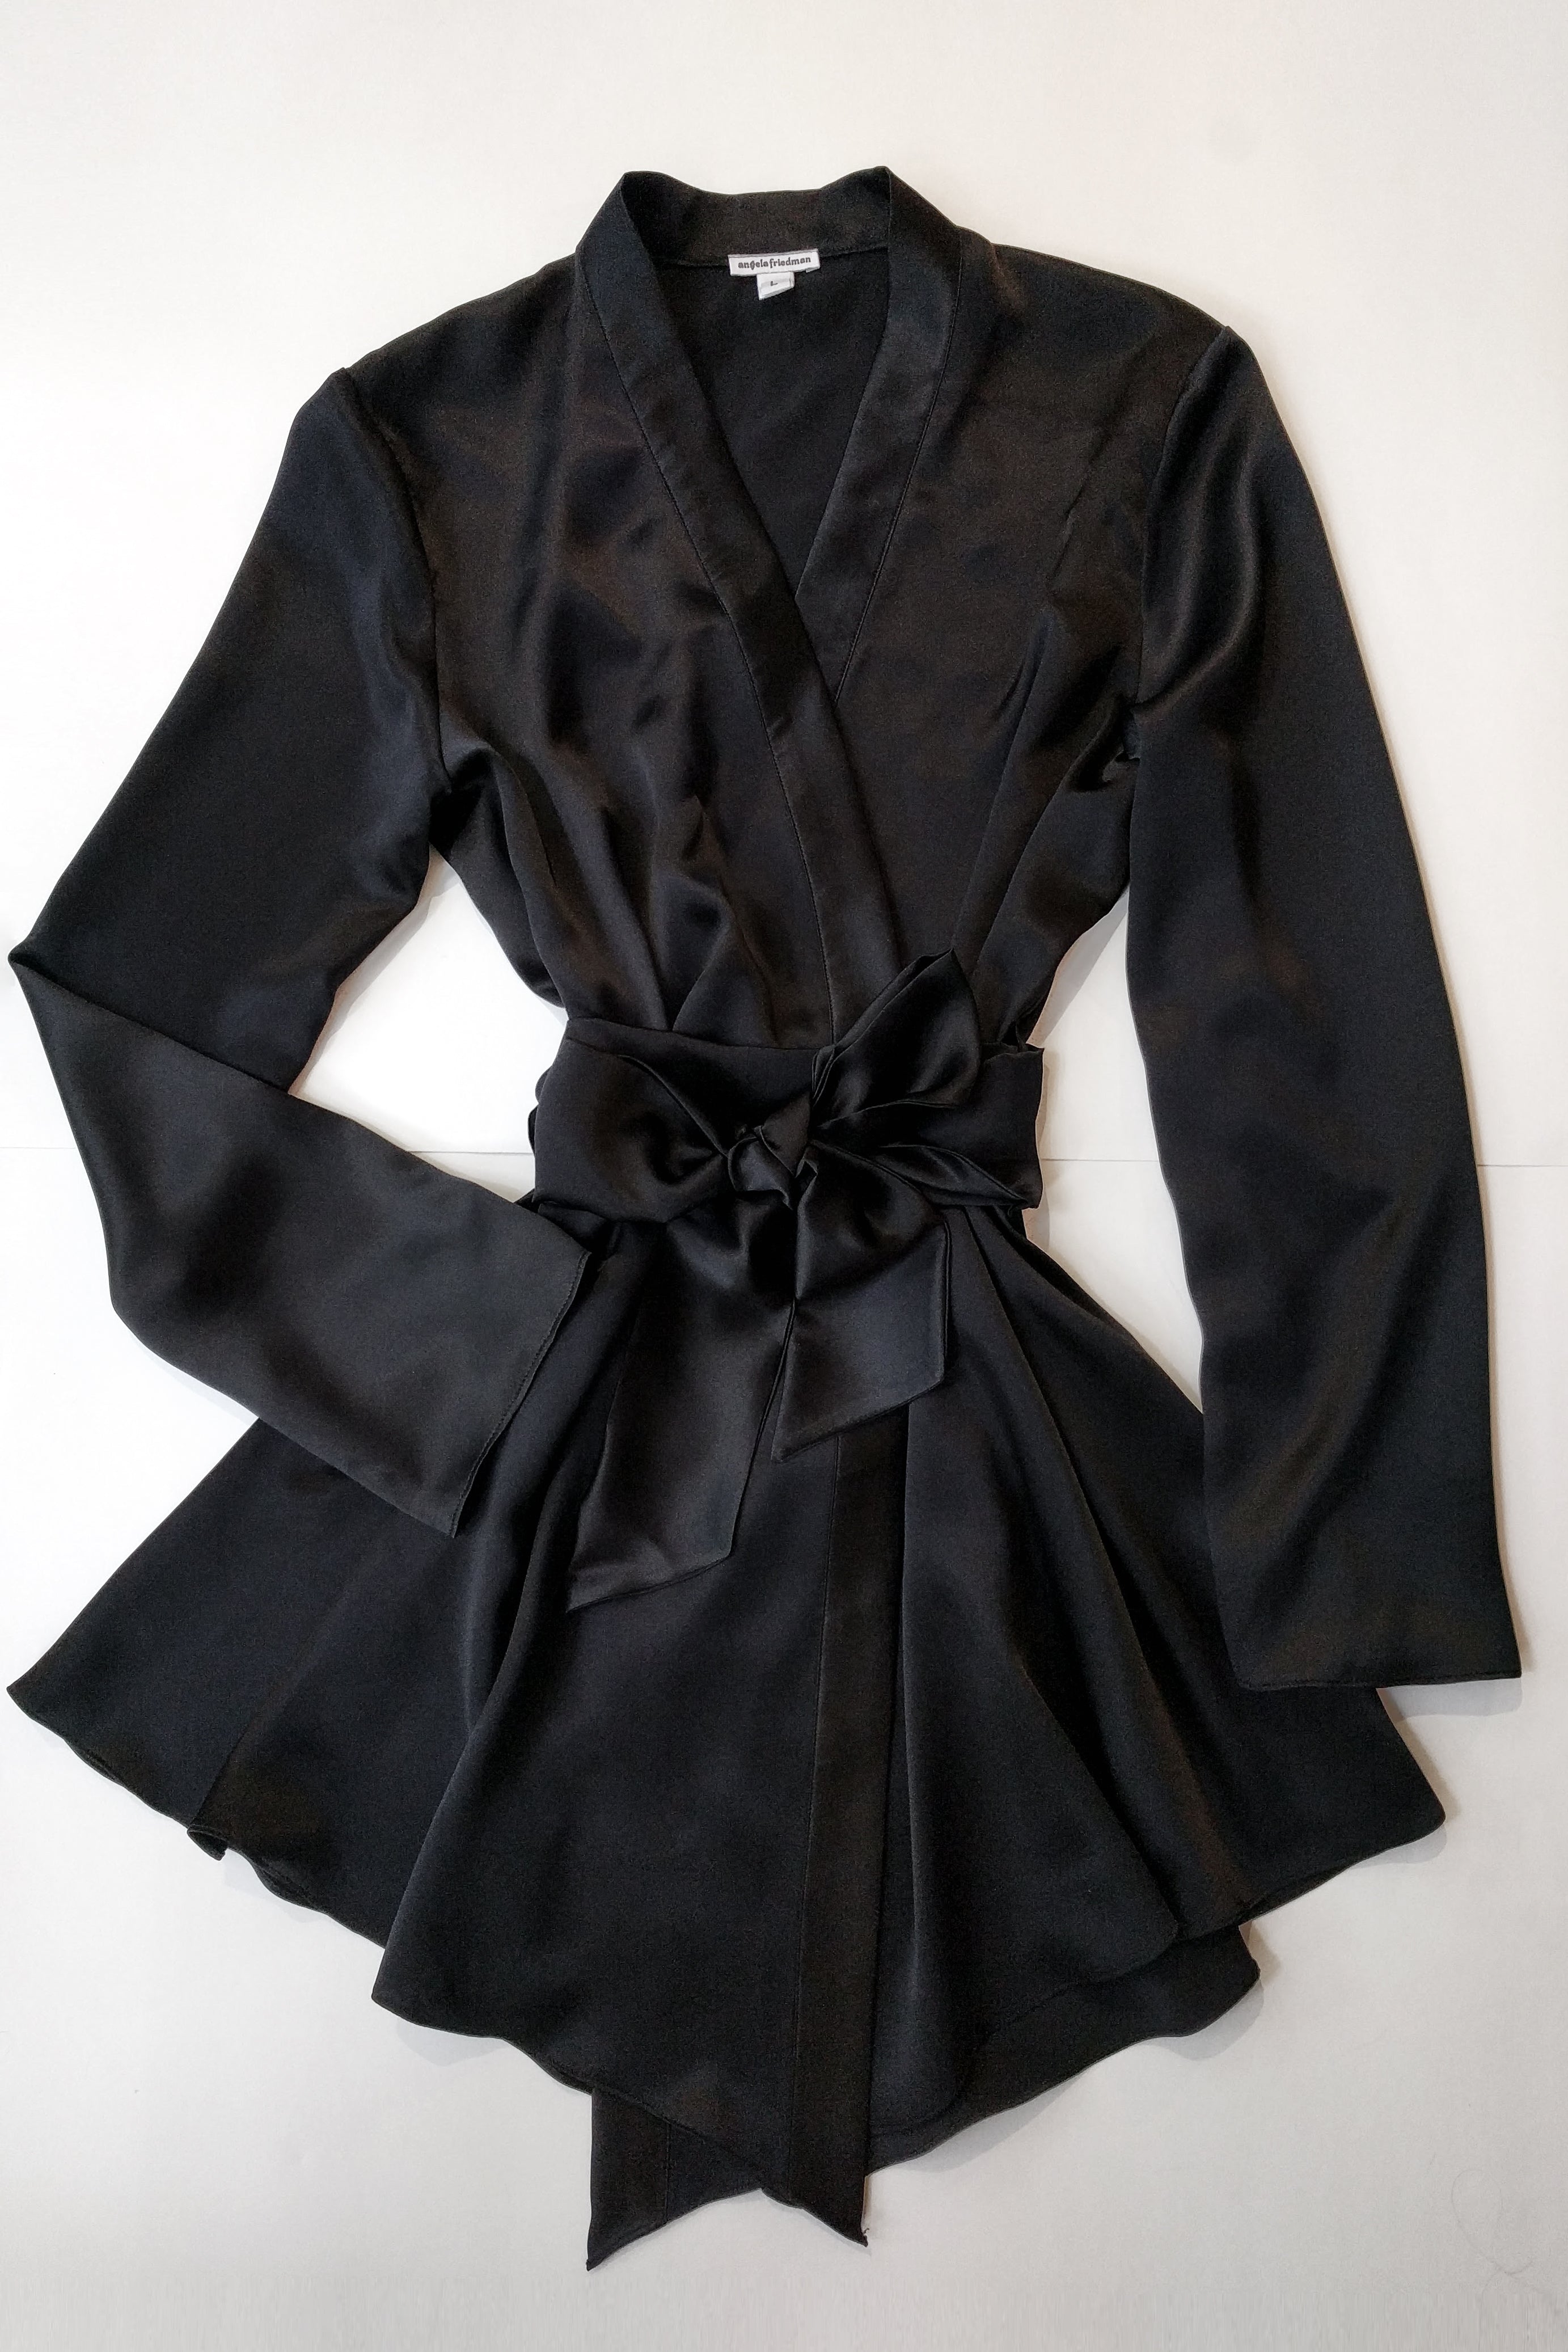 Handmade silk dressing gown in black satin